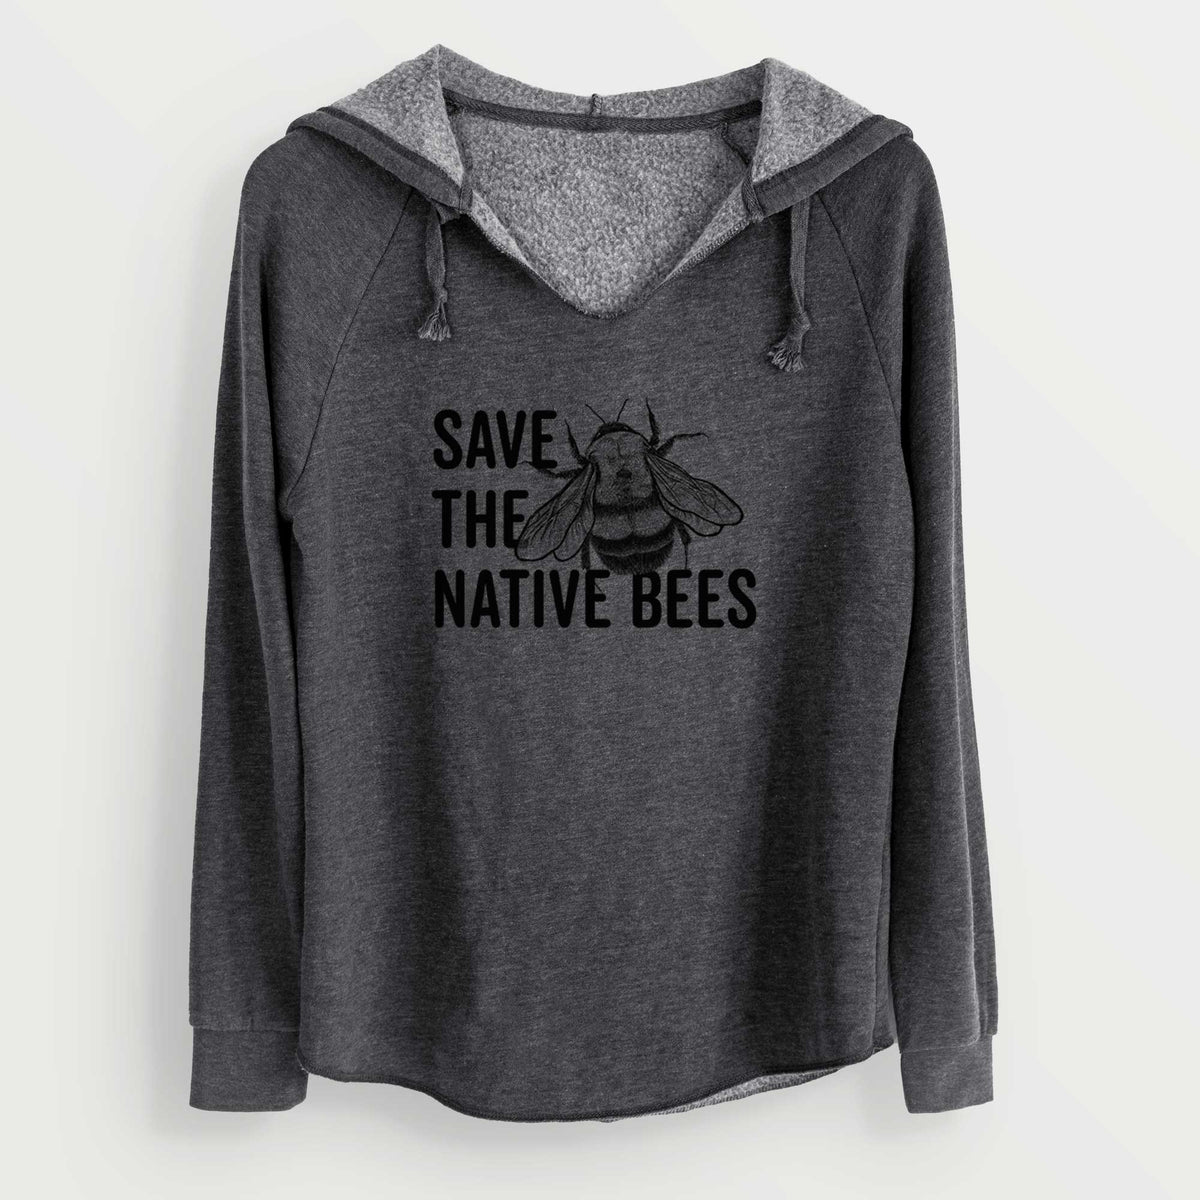 Save the Native Bees - Cali Wave Hooded Sweatshirt